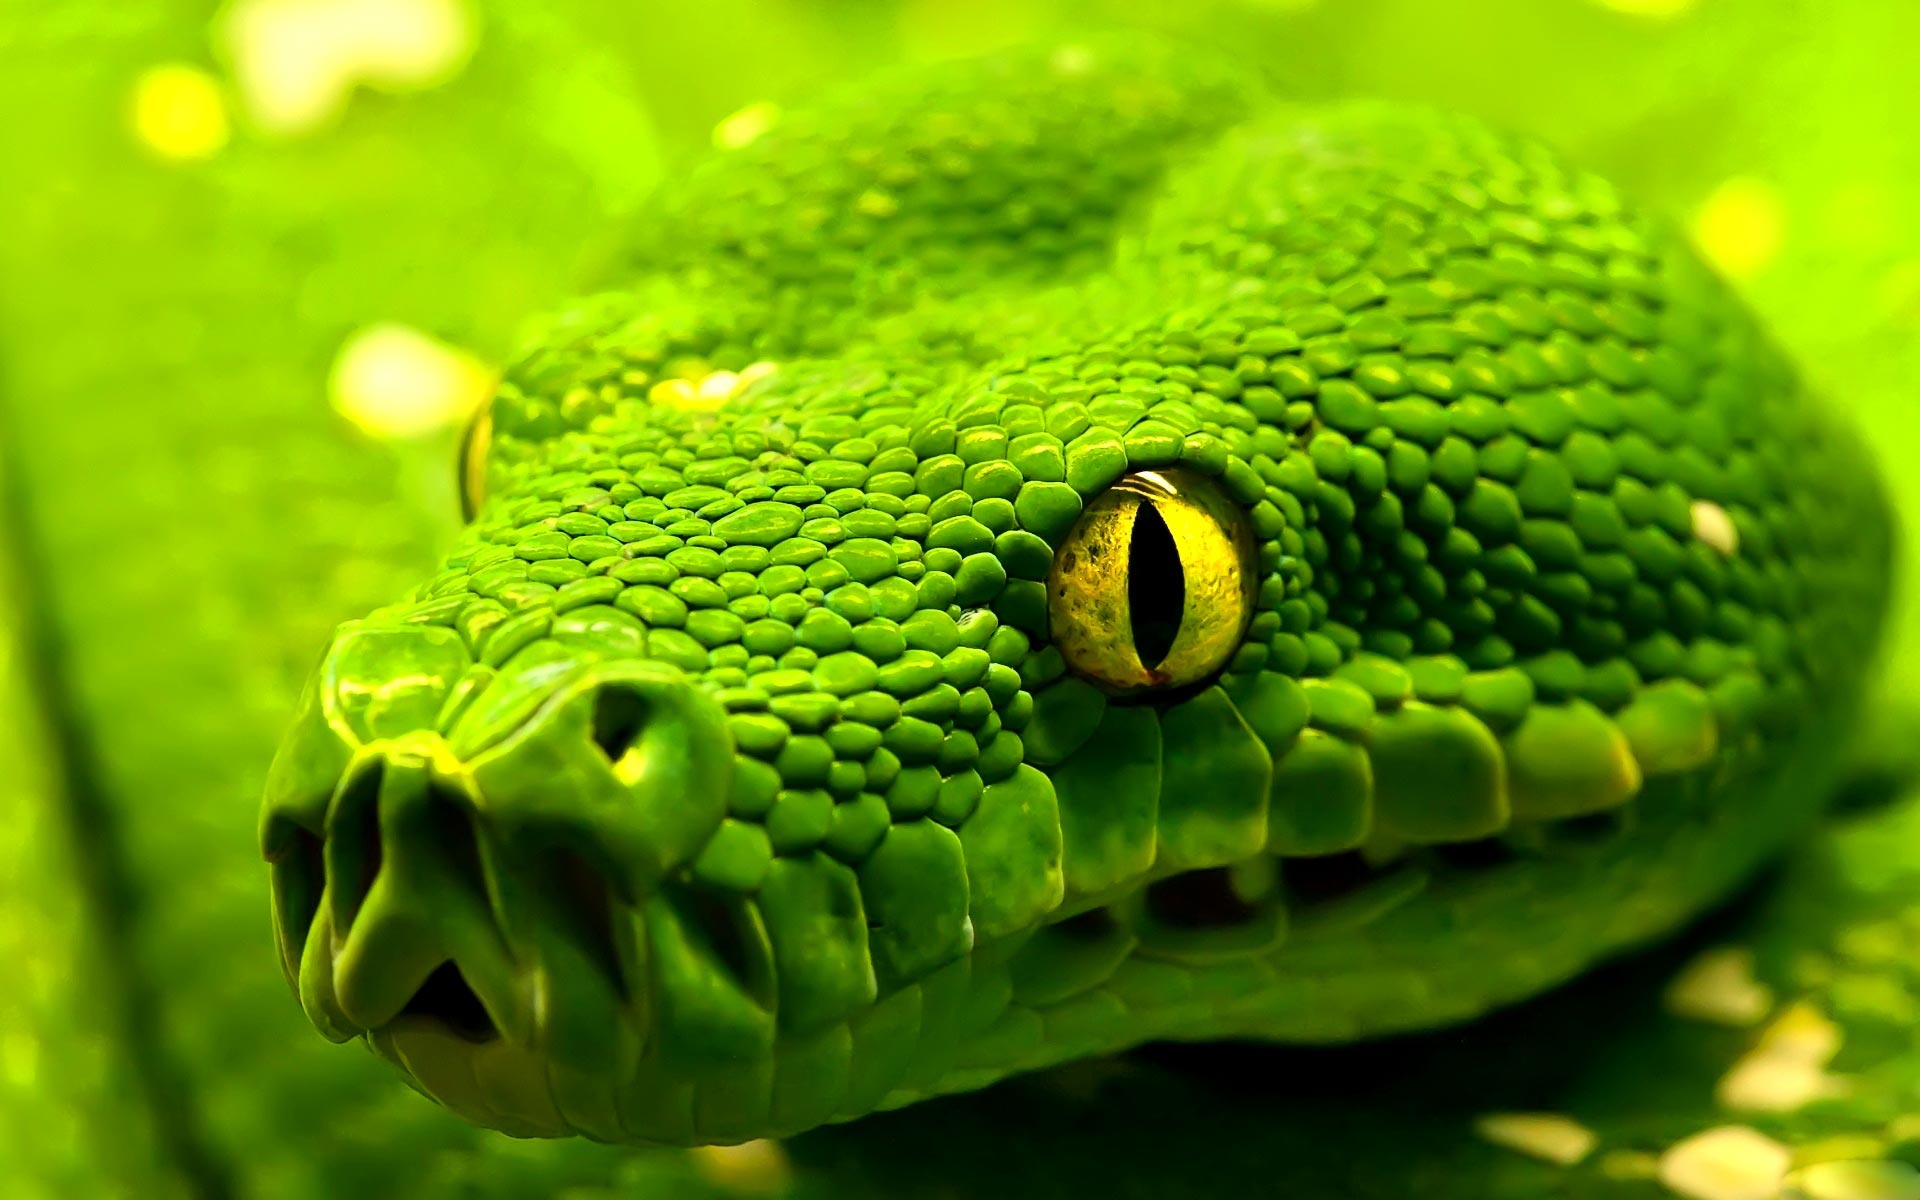 Green snake photo